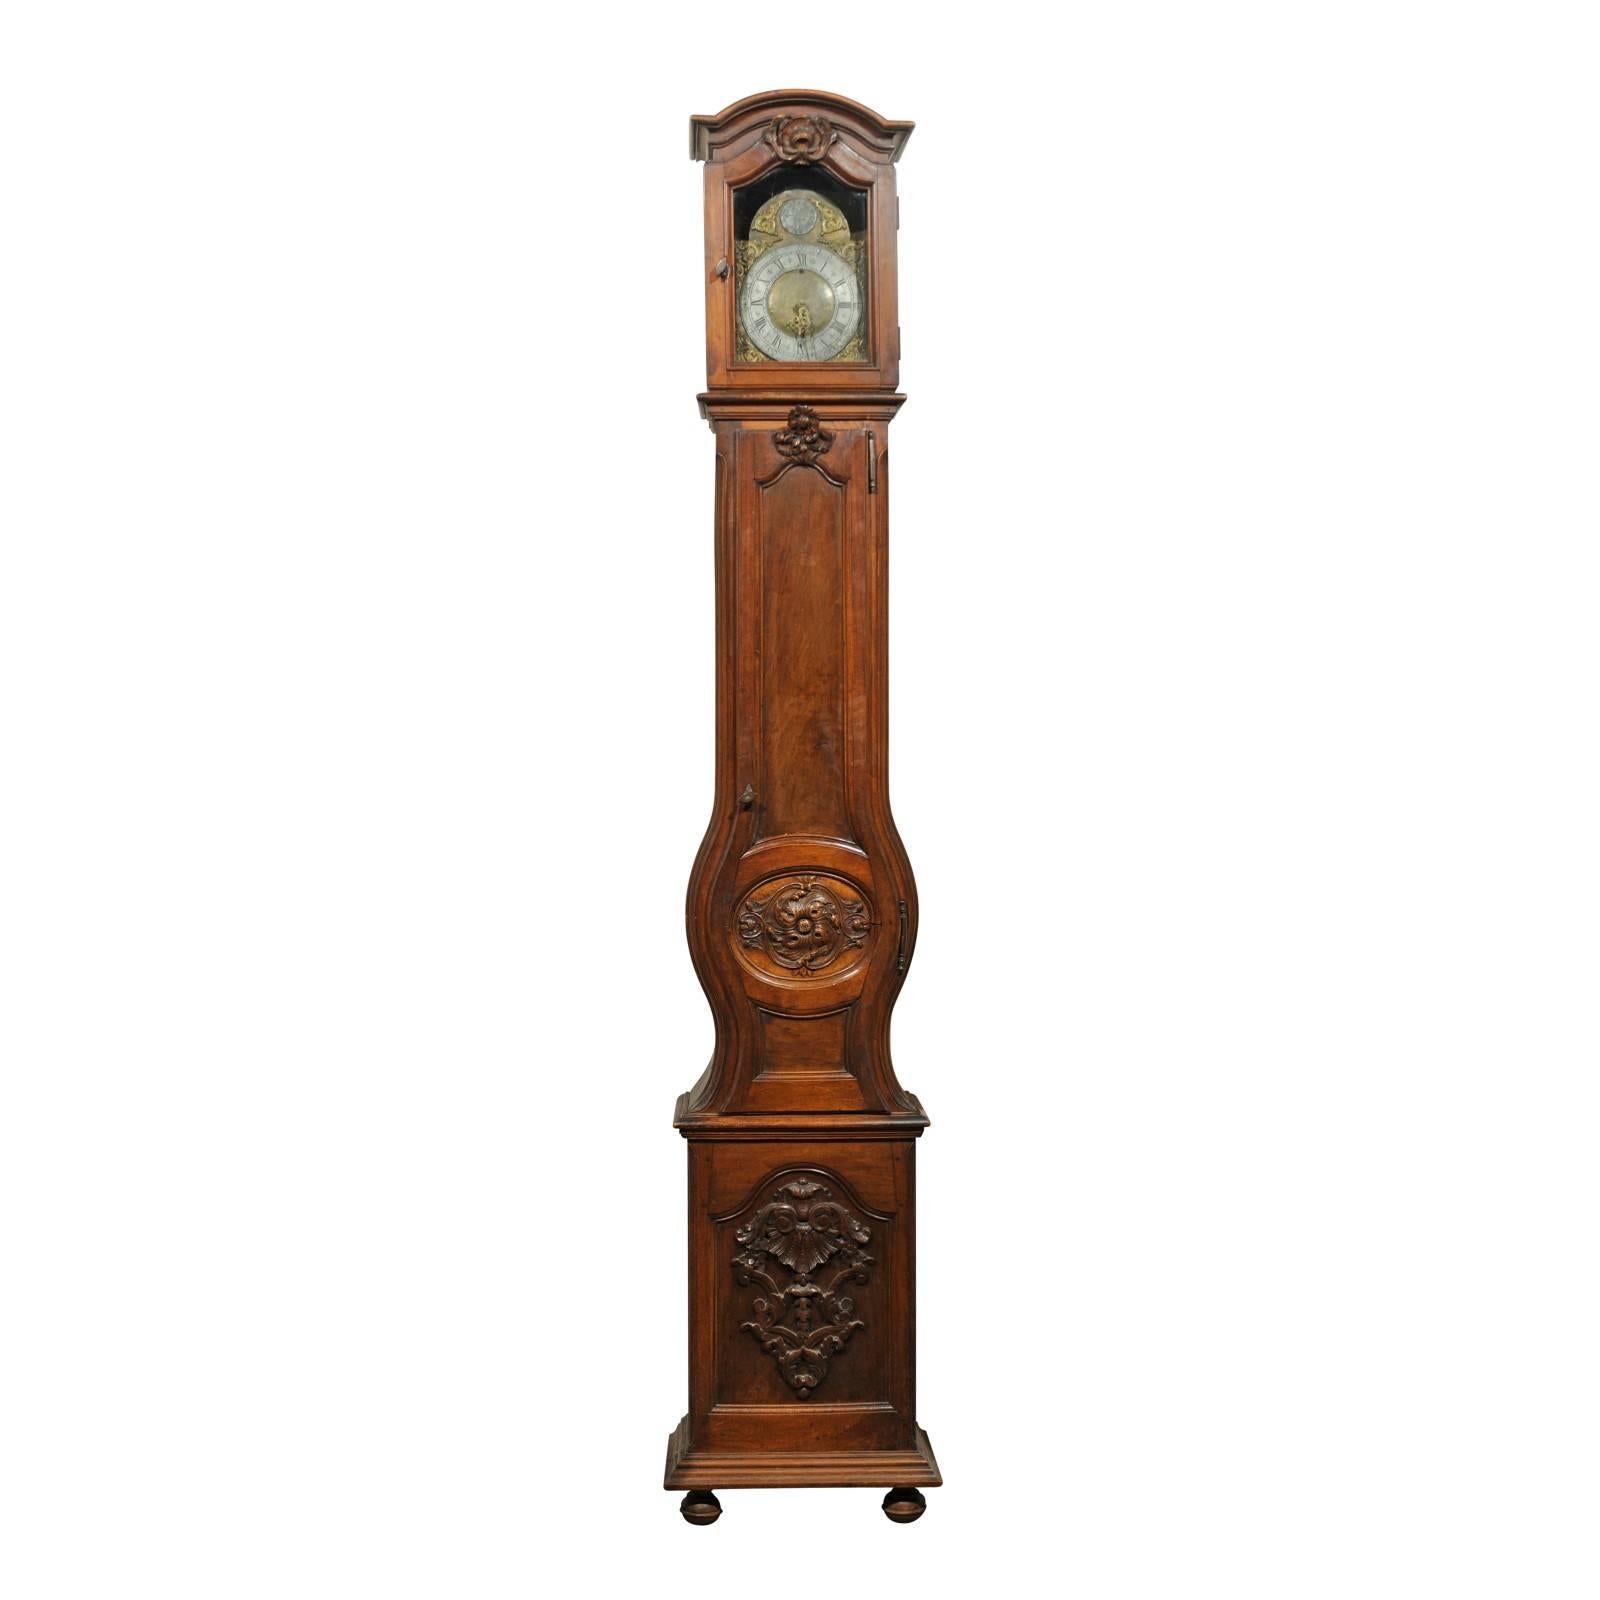 French Louis XV Period Walnut Longcase Clock from the Rhône Valley, circa 1760